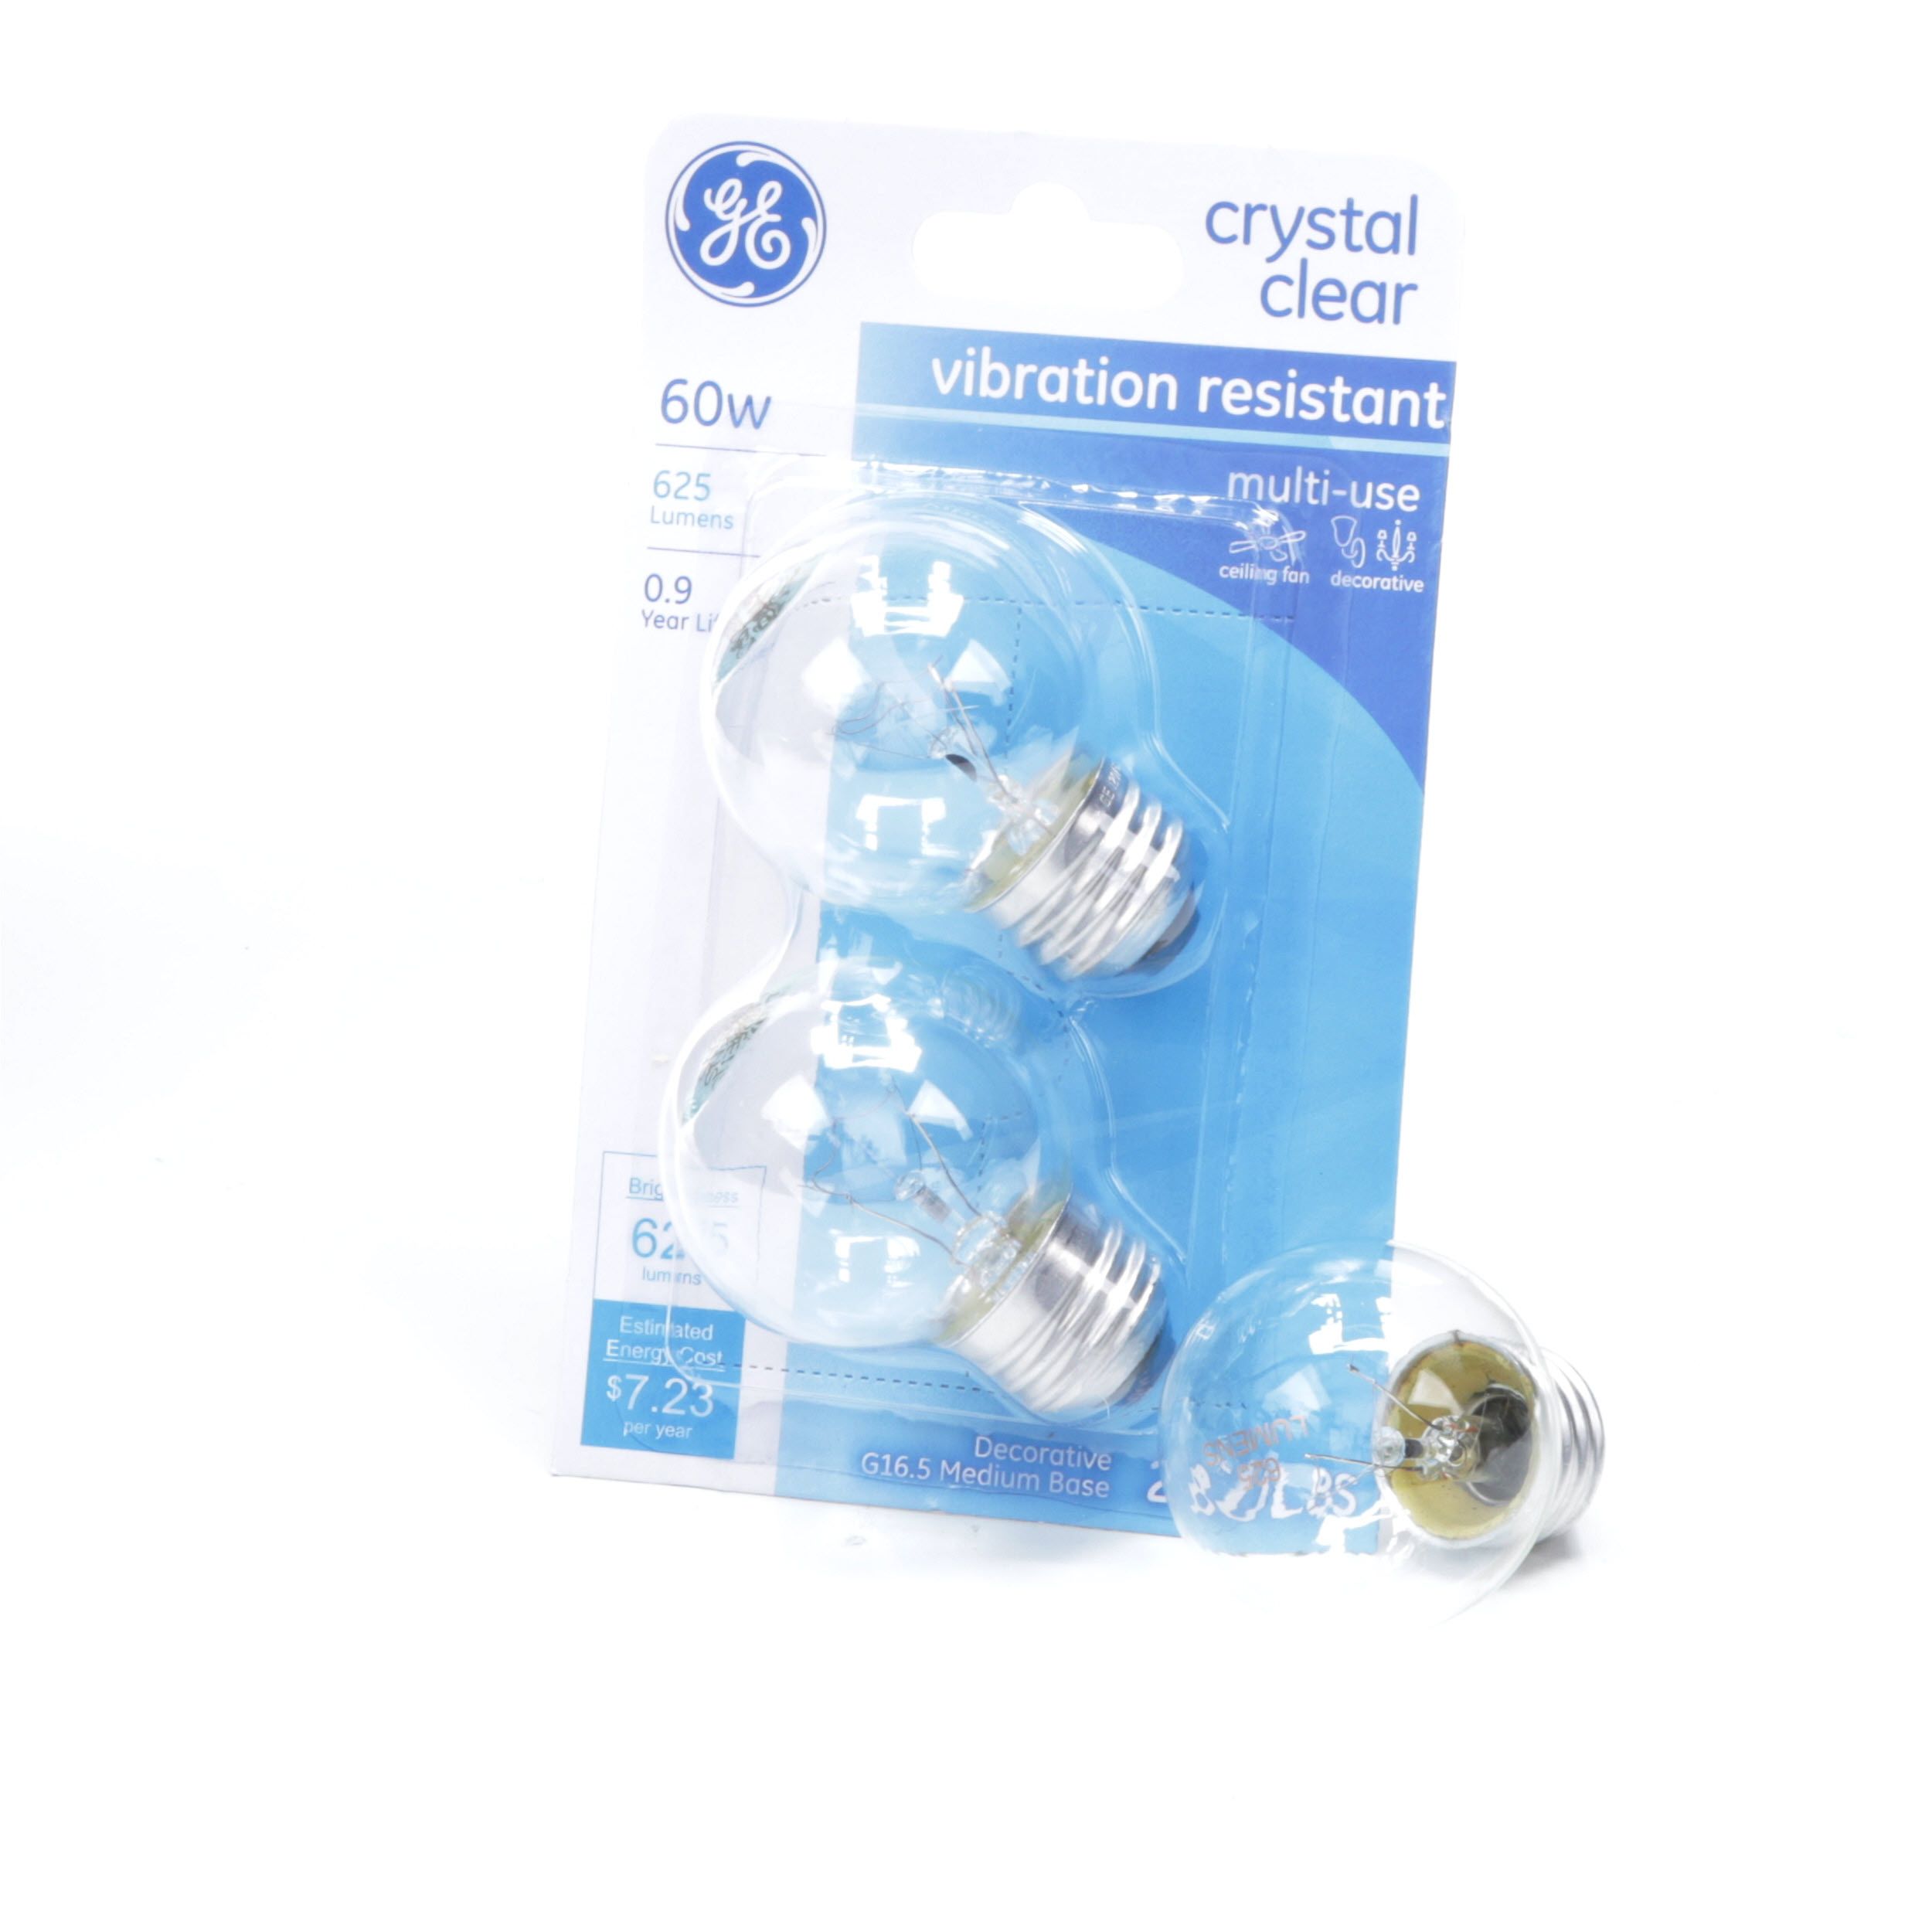 GE Crystal Cl Decorative 40W Incandescent 625 Lumen G25 Globe Light Bulbs 6 Pack 